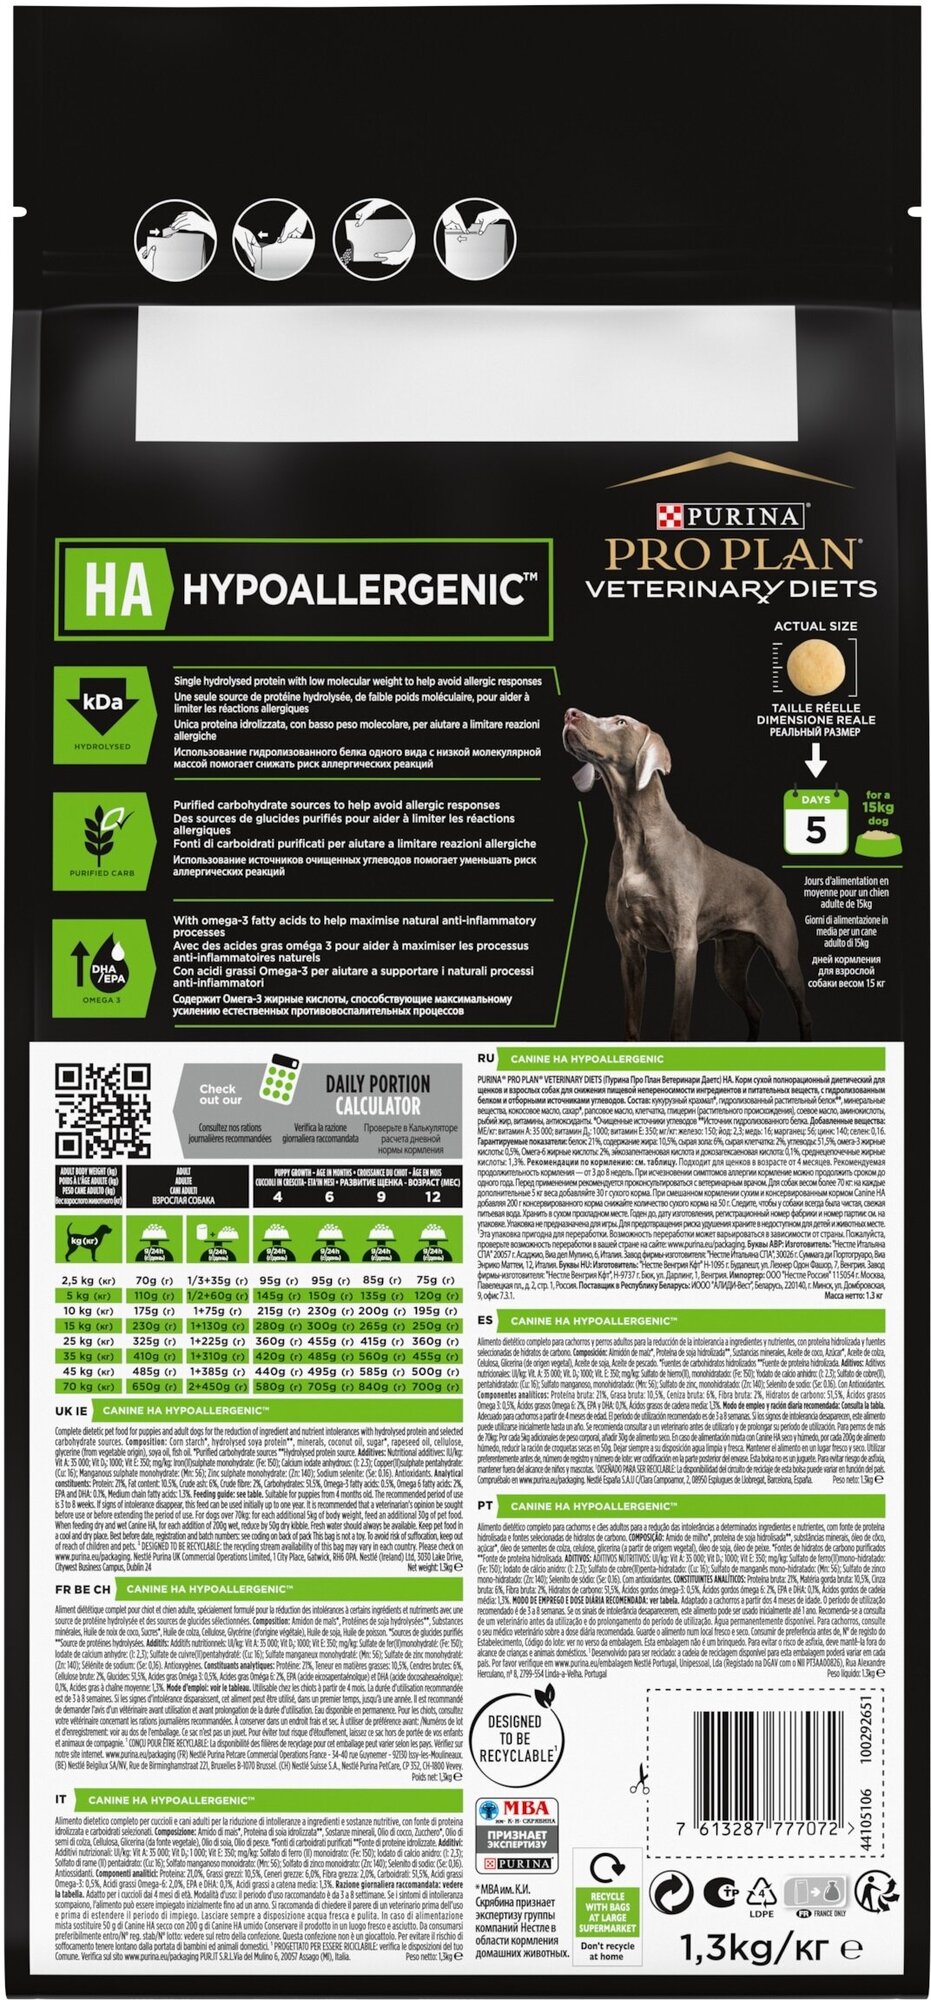 Pro Plan Veterinary Diets HA Hypoallergenic корм для собак профилактика аллергии (Диетический, 3 кг.) Purina Pro Plan Veterinary Diets - фото №7